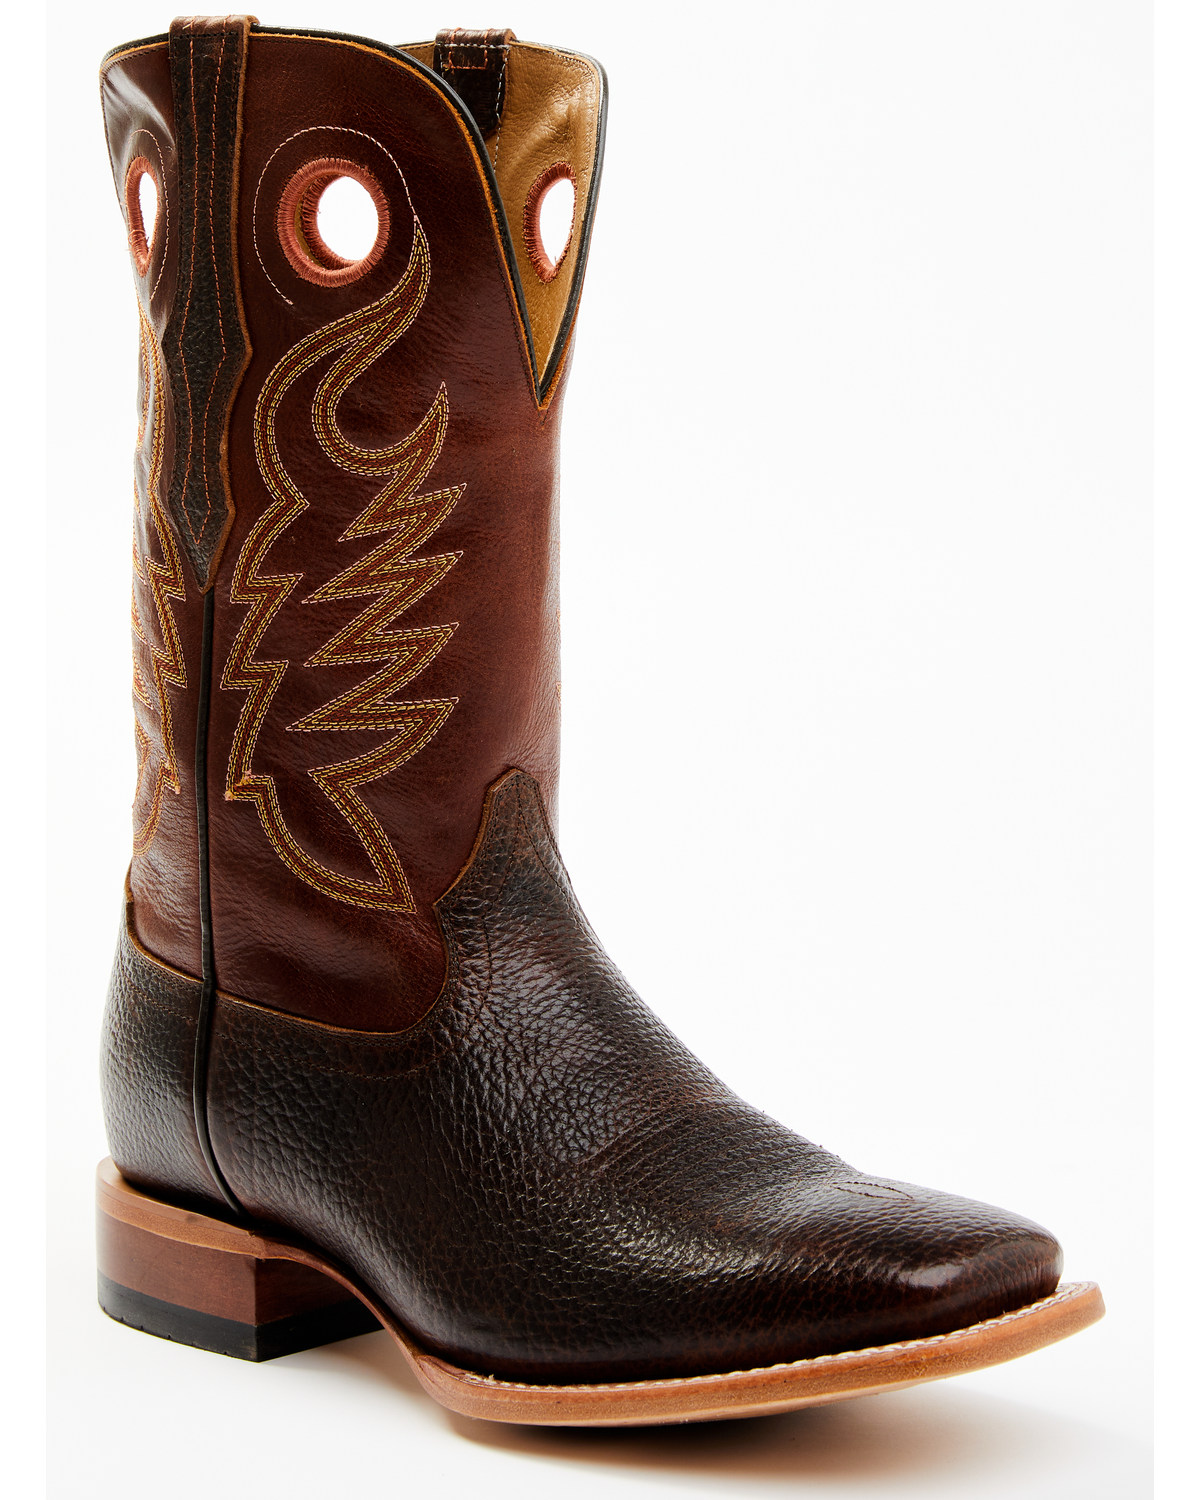 Cody James Men's Union Xero Gravity Western Boots - Broad Square Toe